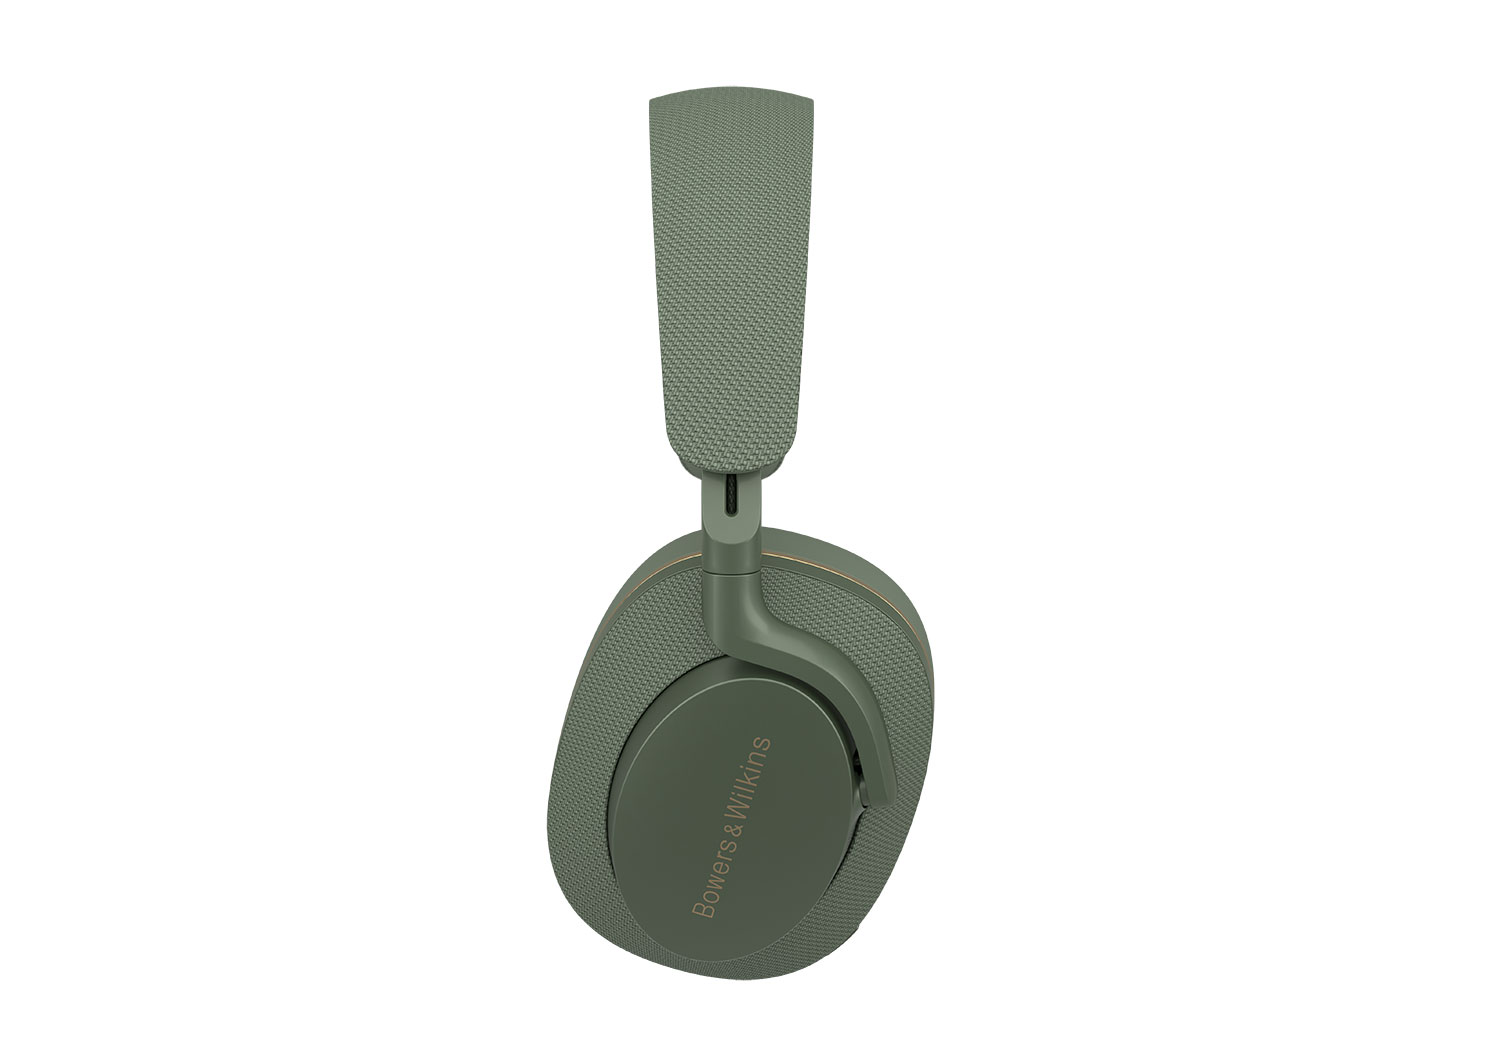 PX-7 S2e Wireless Headphone 
(Forest Green)